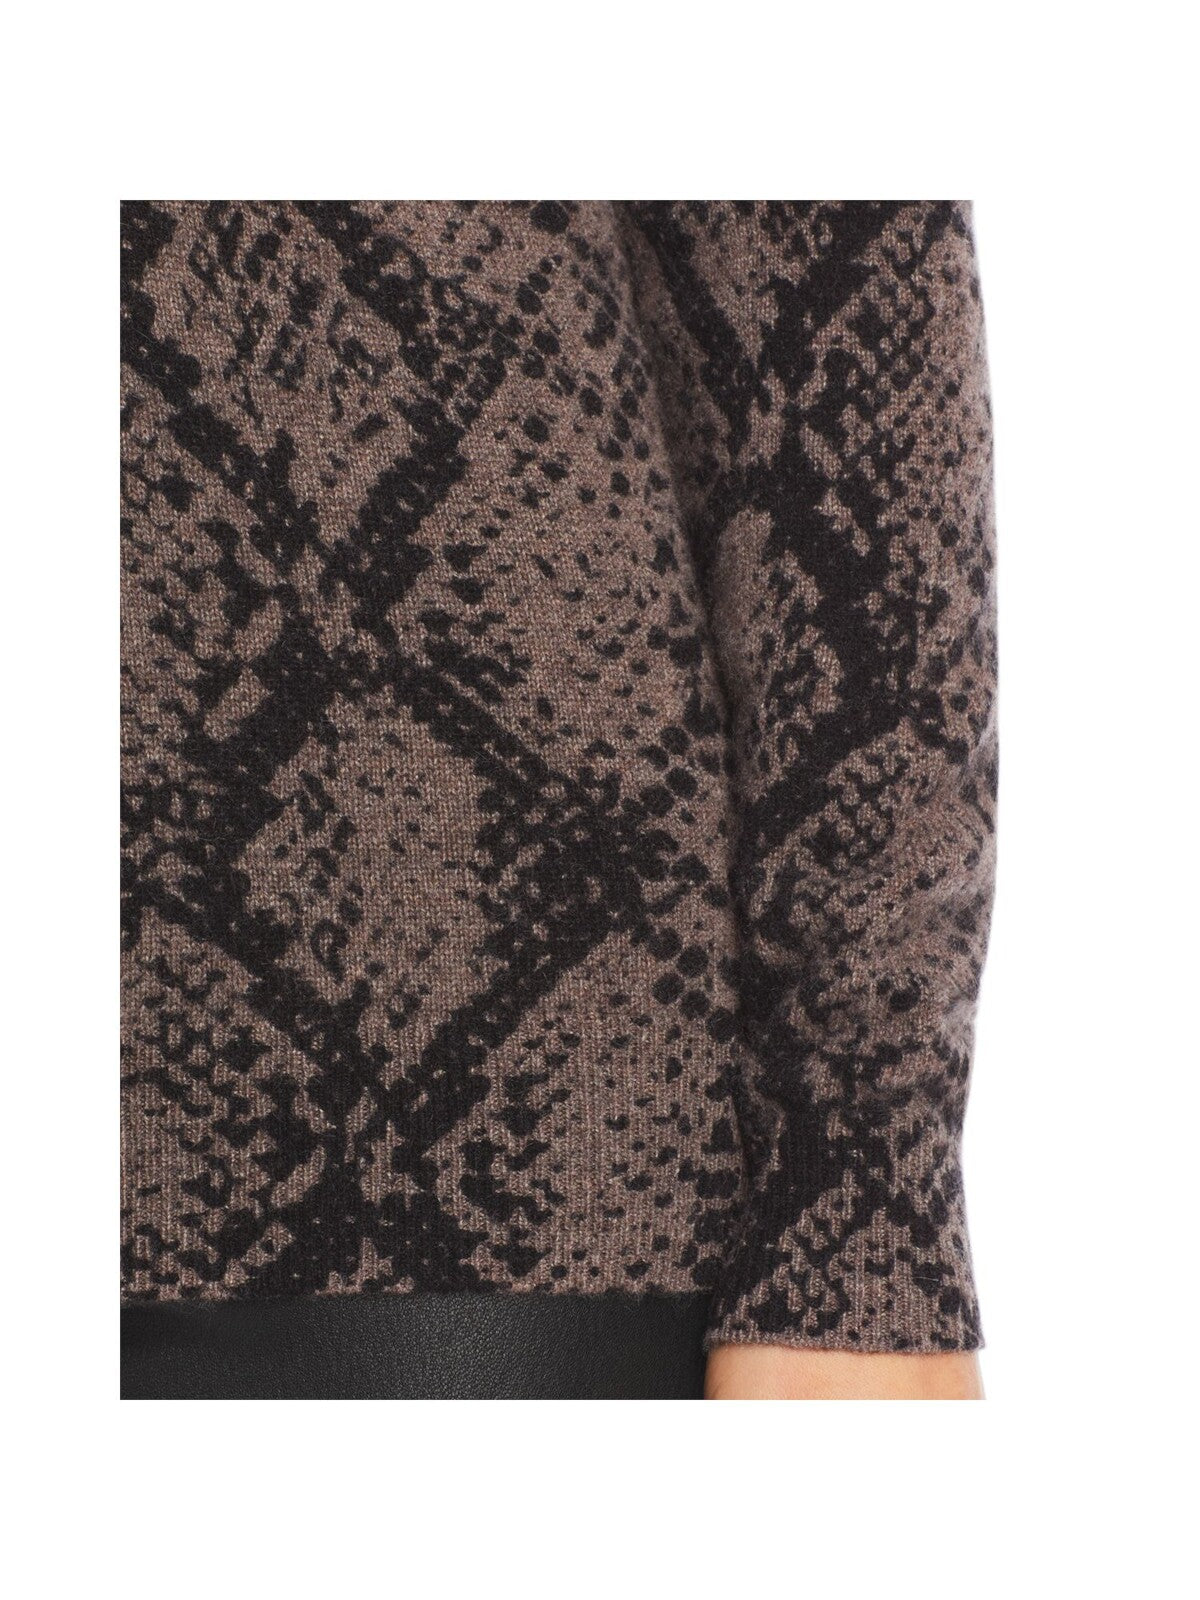 Designer Brand Womens Brown Cashmere Animal Print Long Sleeve Crew Neck Wear To Work Sweater S